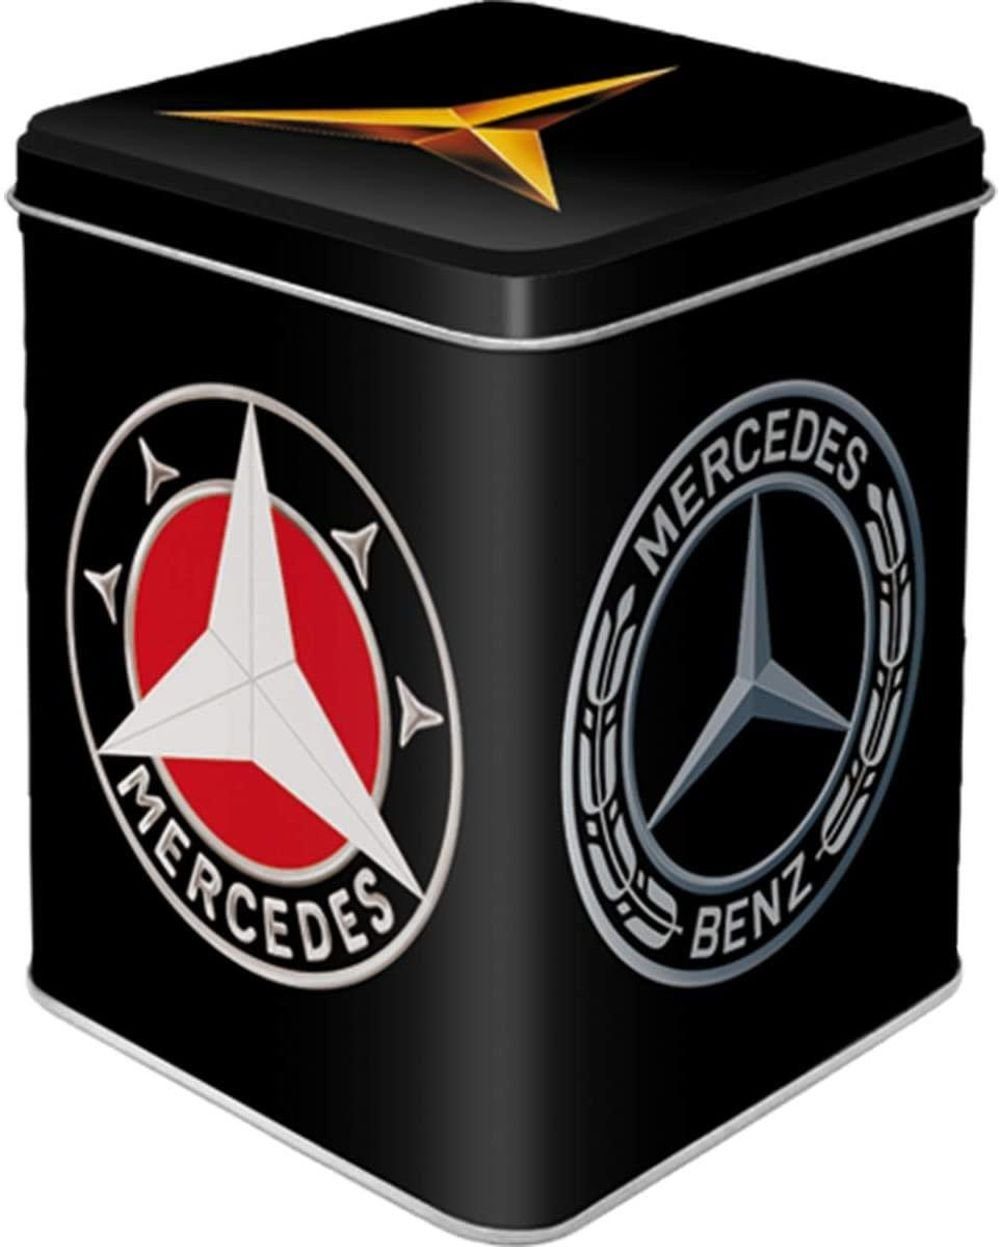 - Gewürzdose Teedose Nostalgic-Art Vorratsdose Evolution Teedose Mercedes Logo Benz